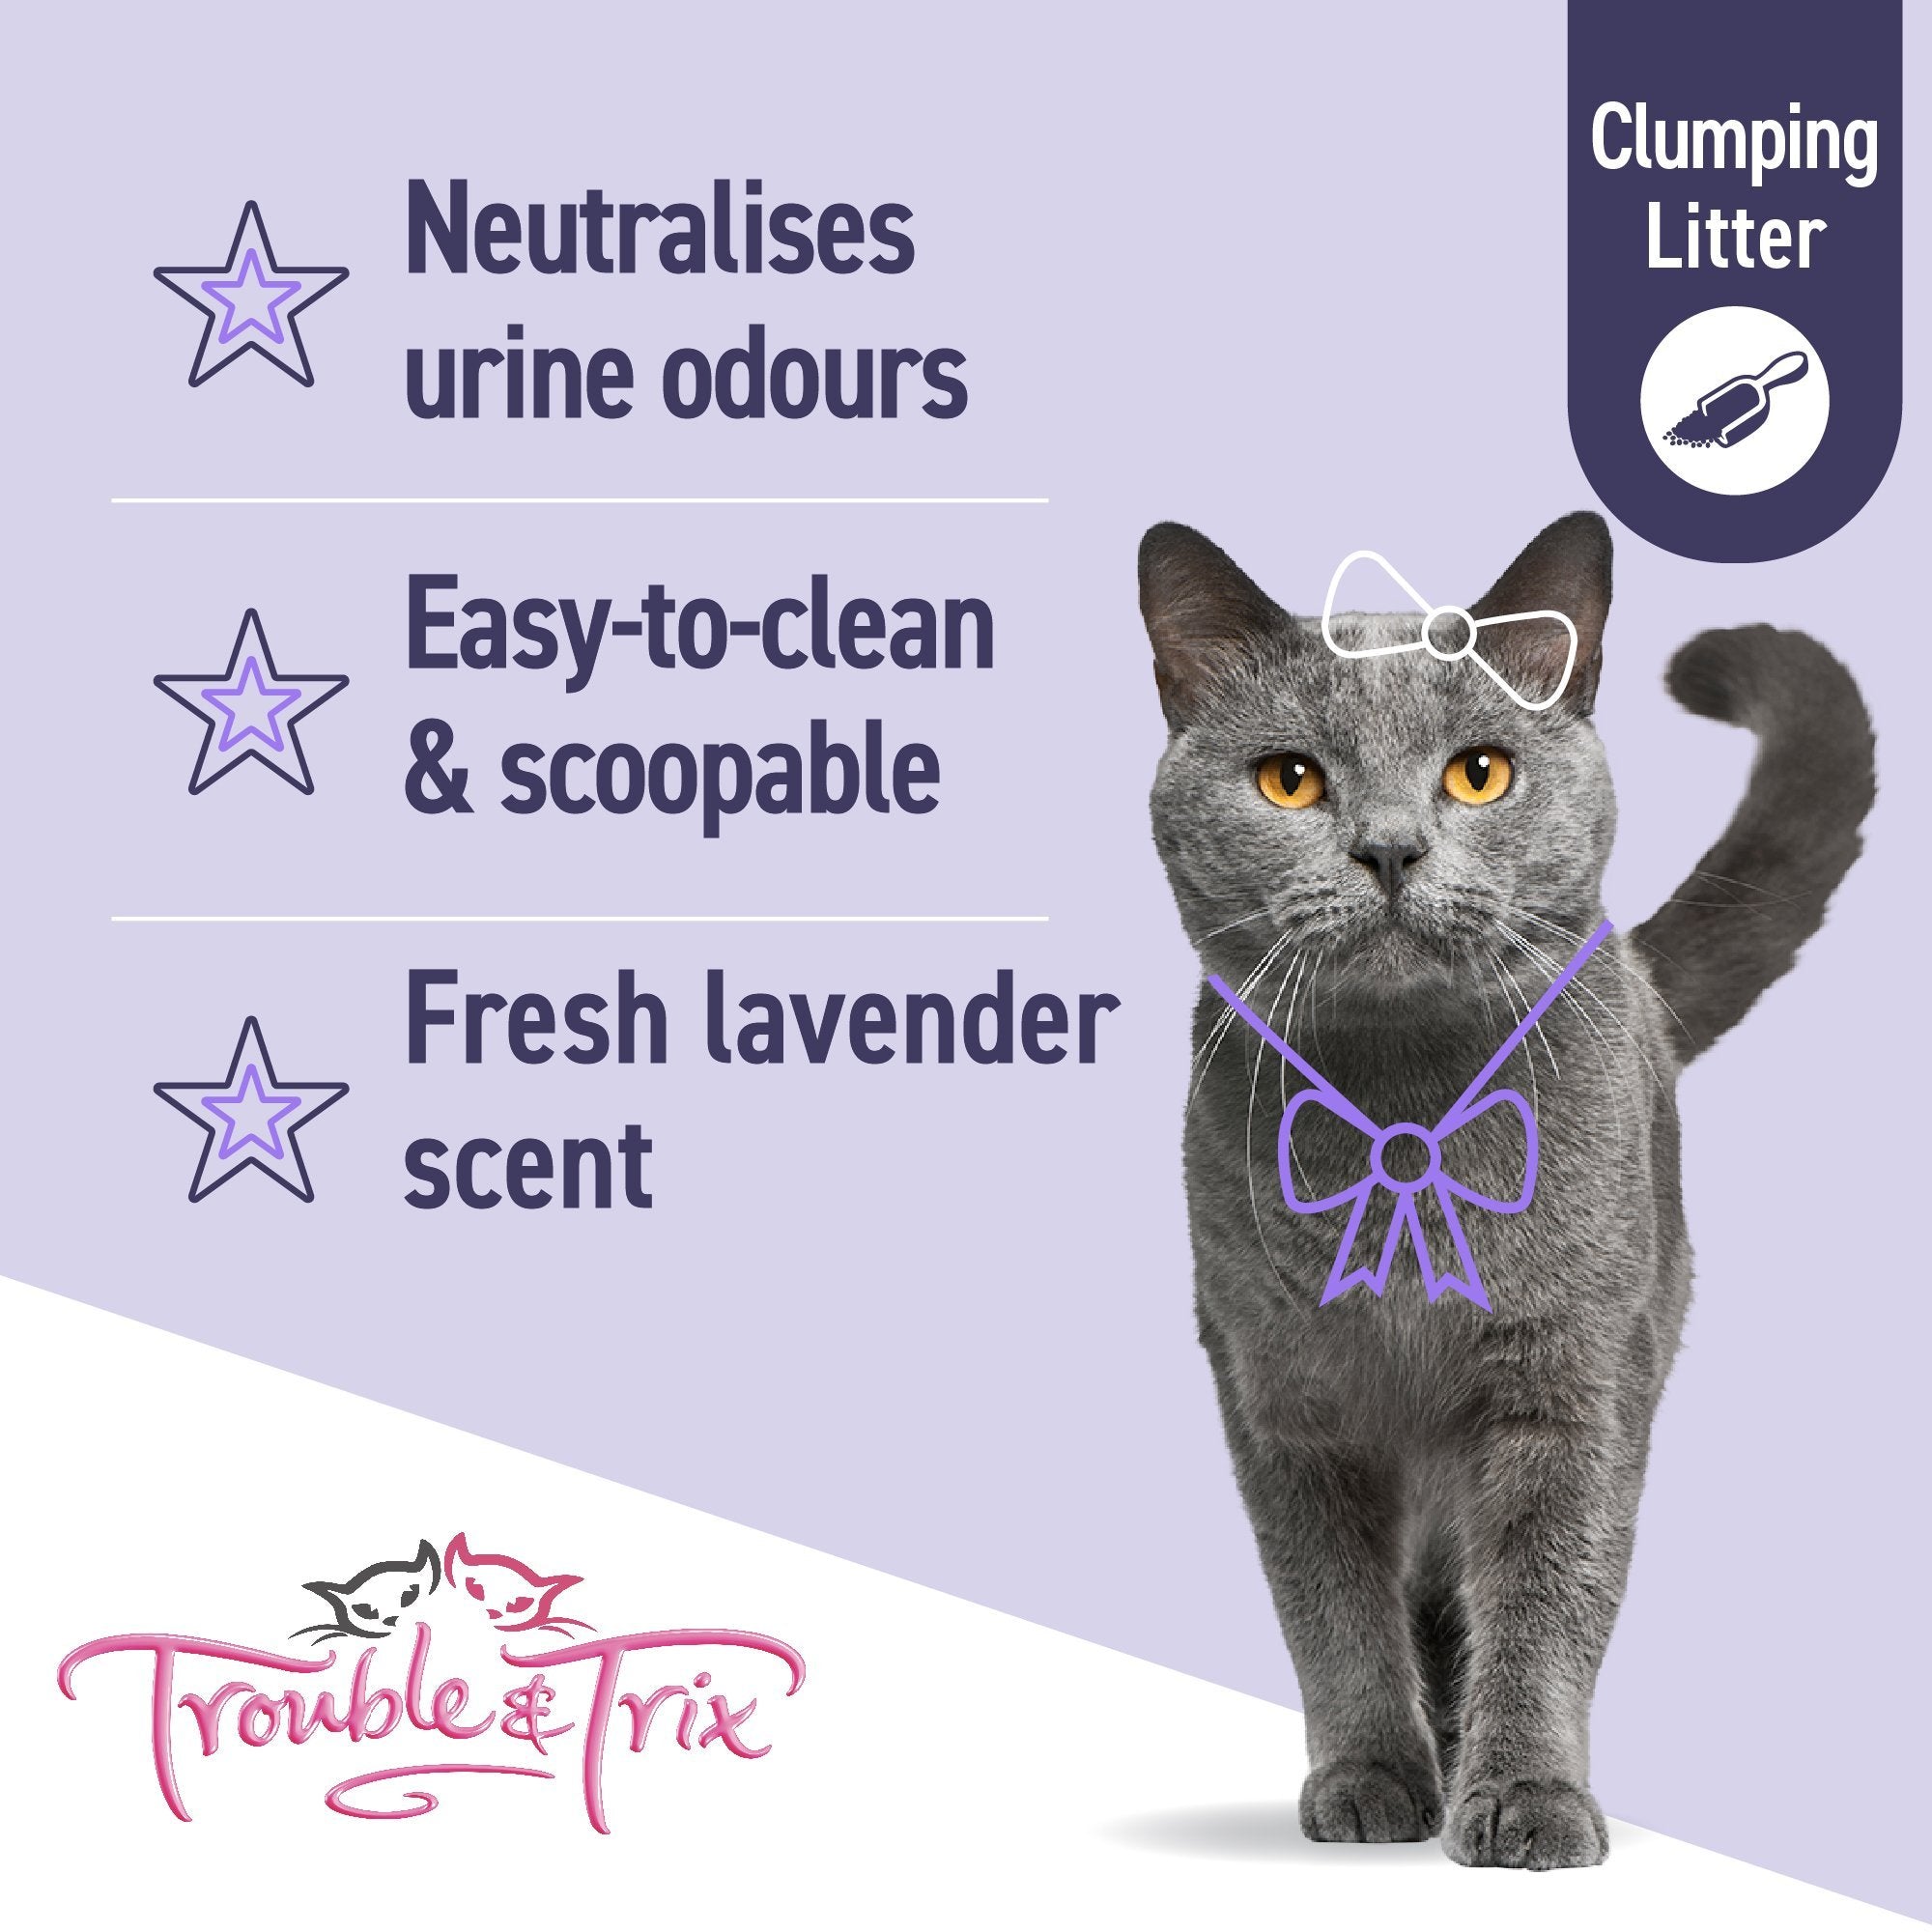 Trouble & Trix Clumping Odour Neutralising Lavender Litter